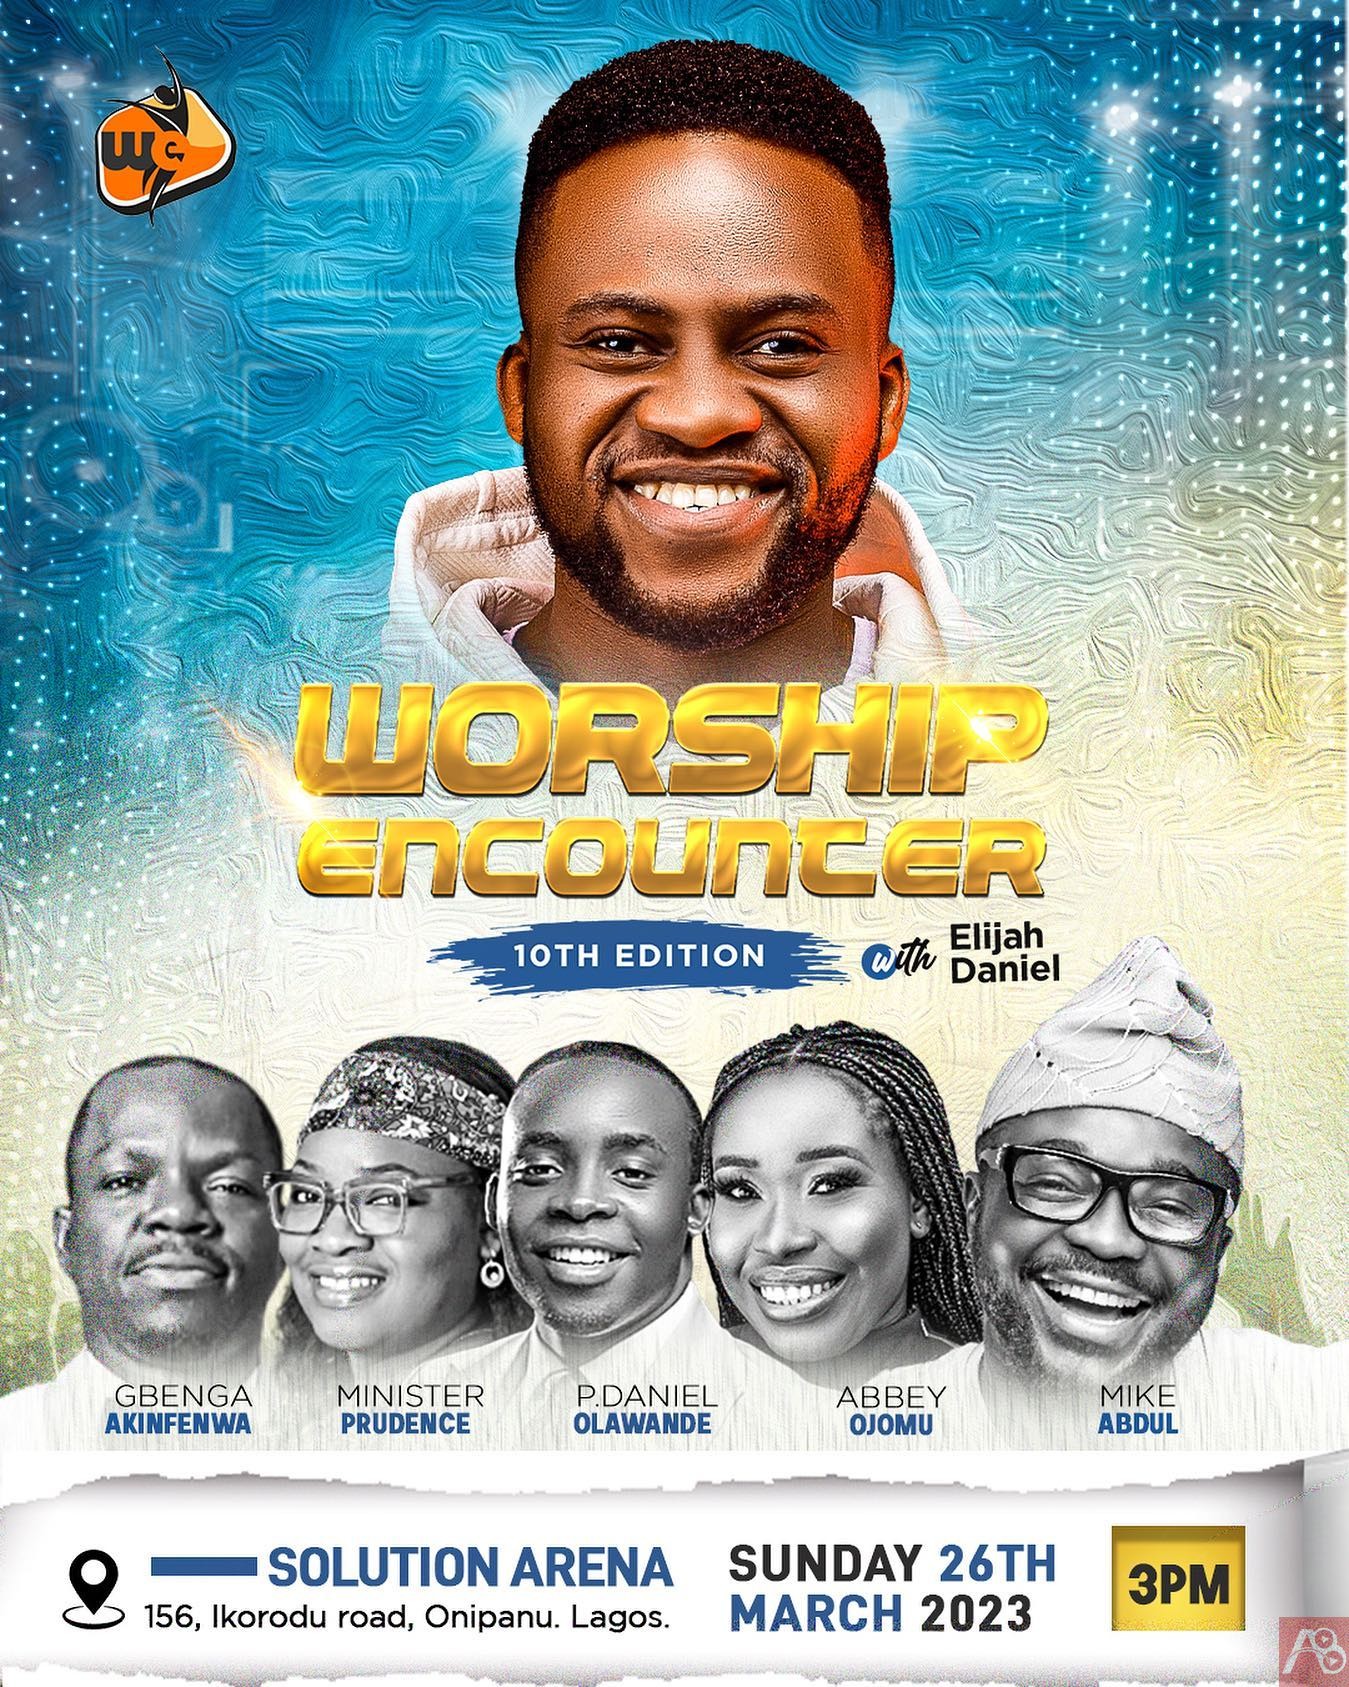 10th edition of Worship Encounter with Elijah Daniel